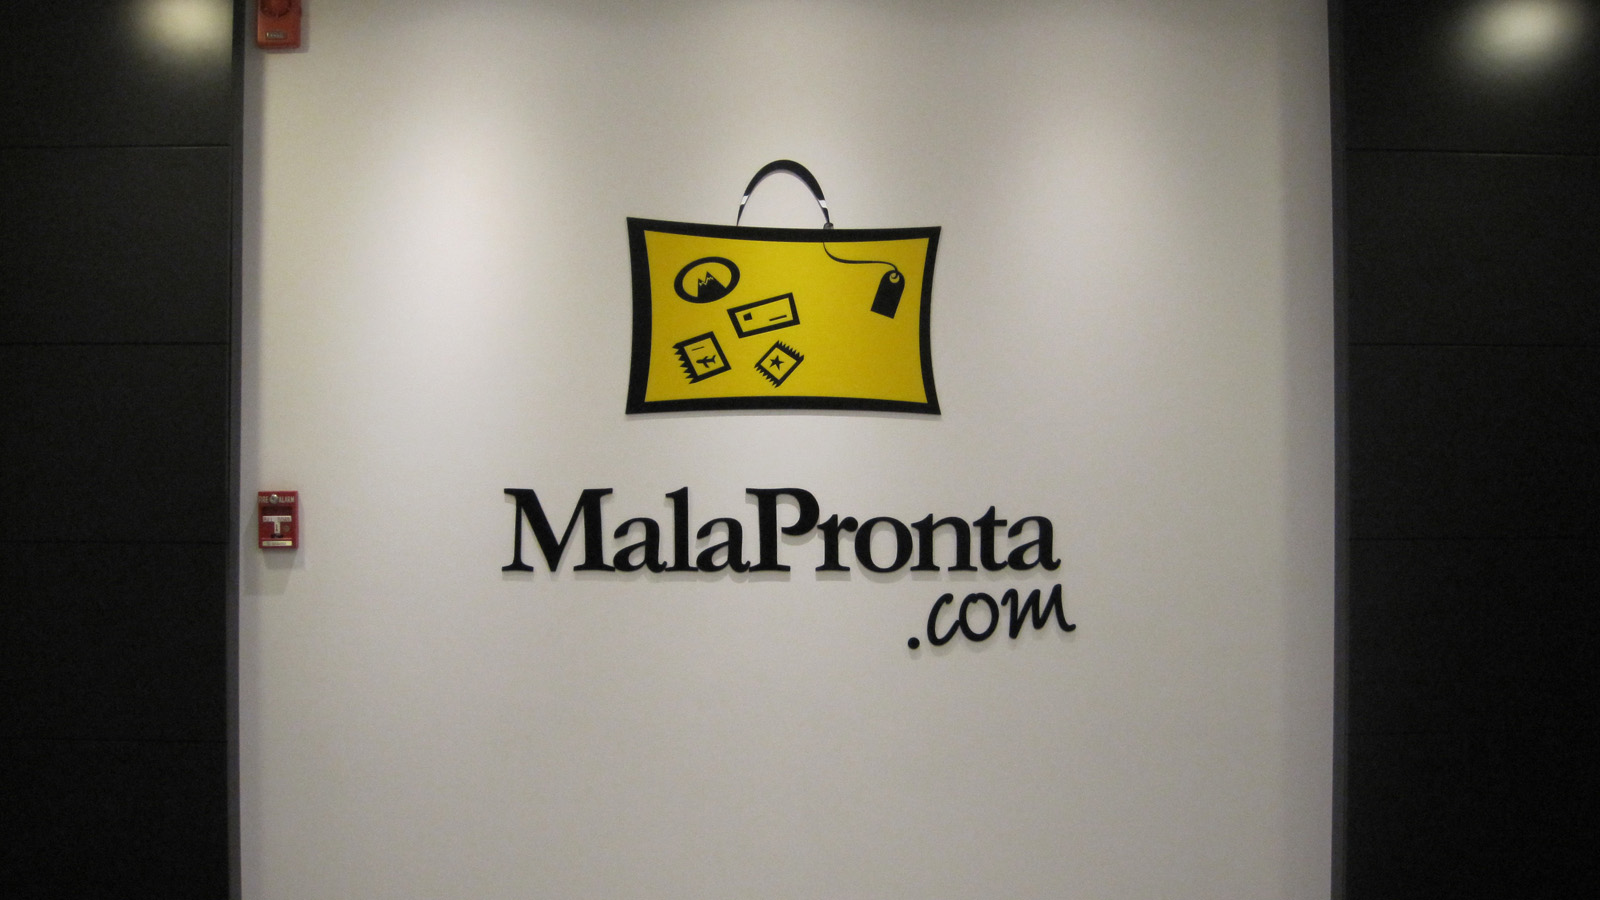 MALAPRONTA.COM